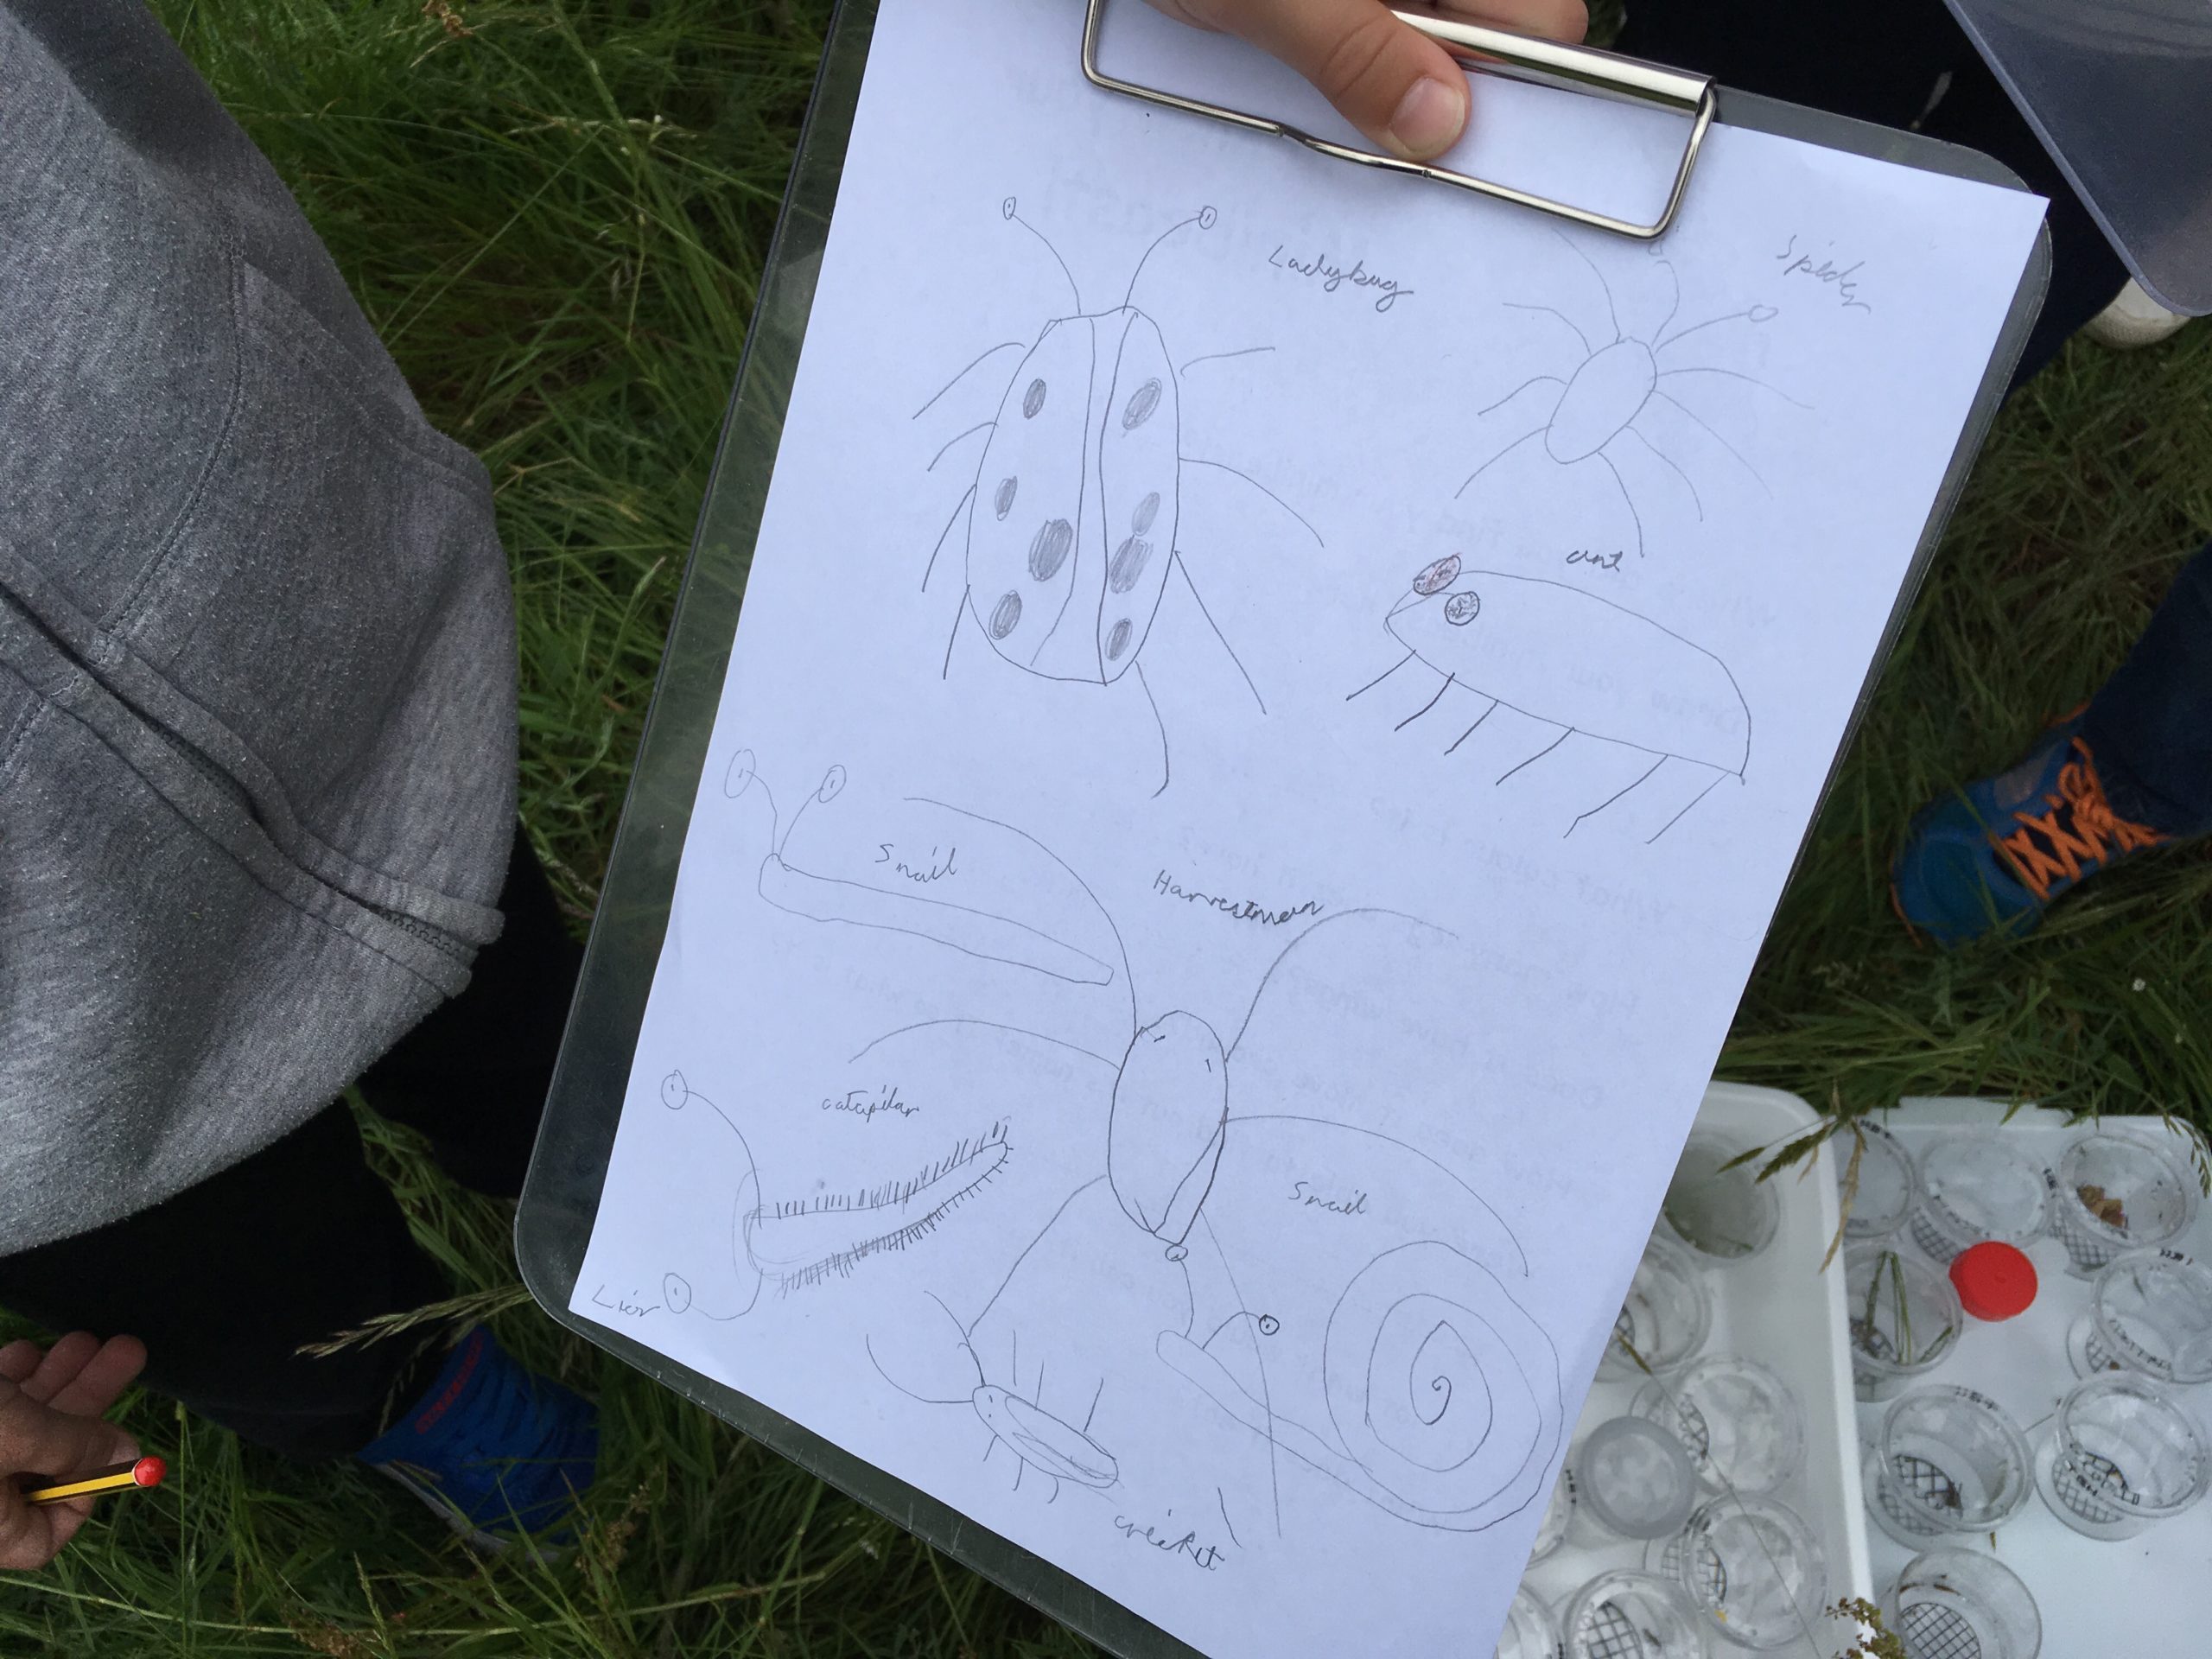 A child's sketches of invertebrates